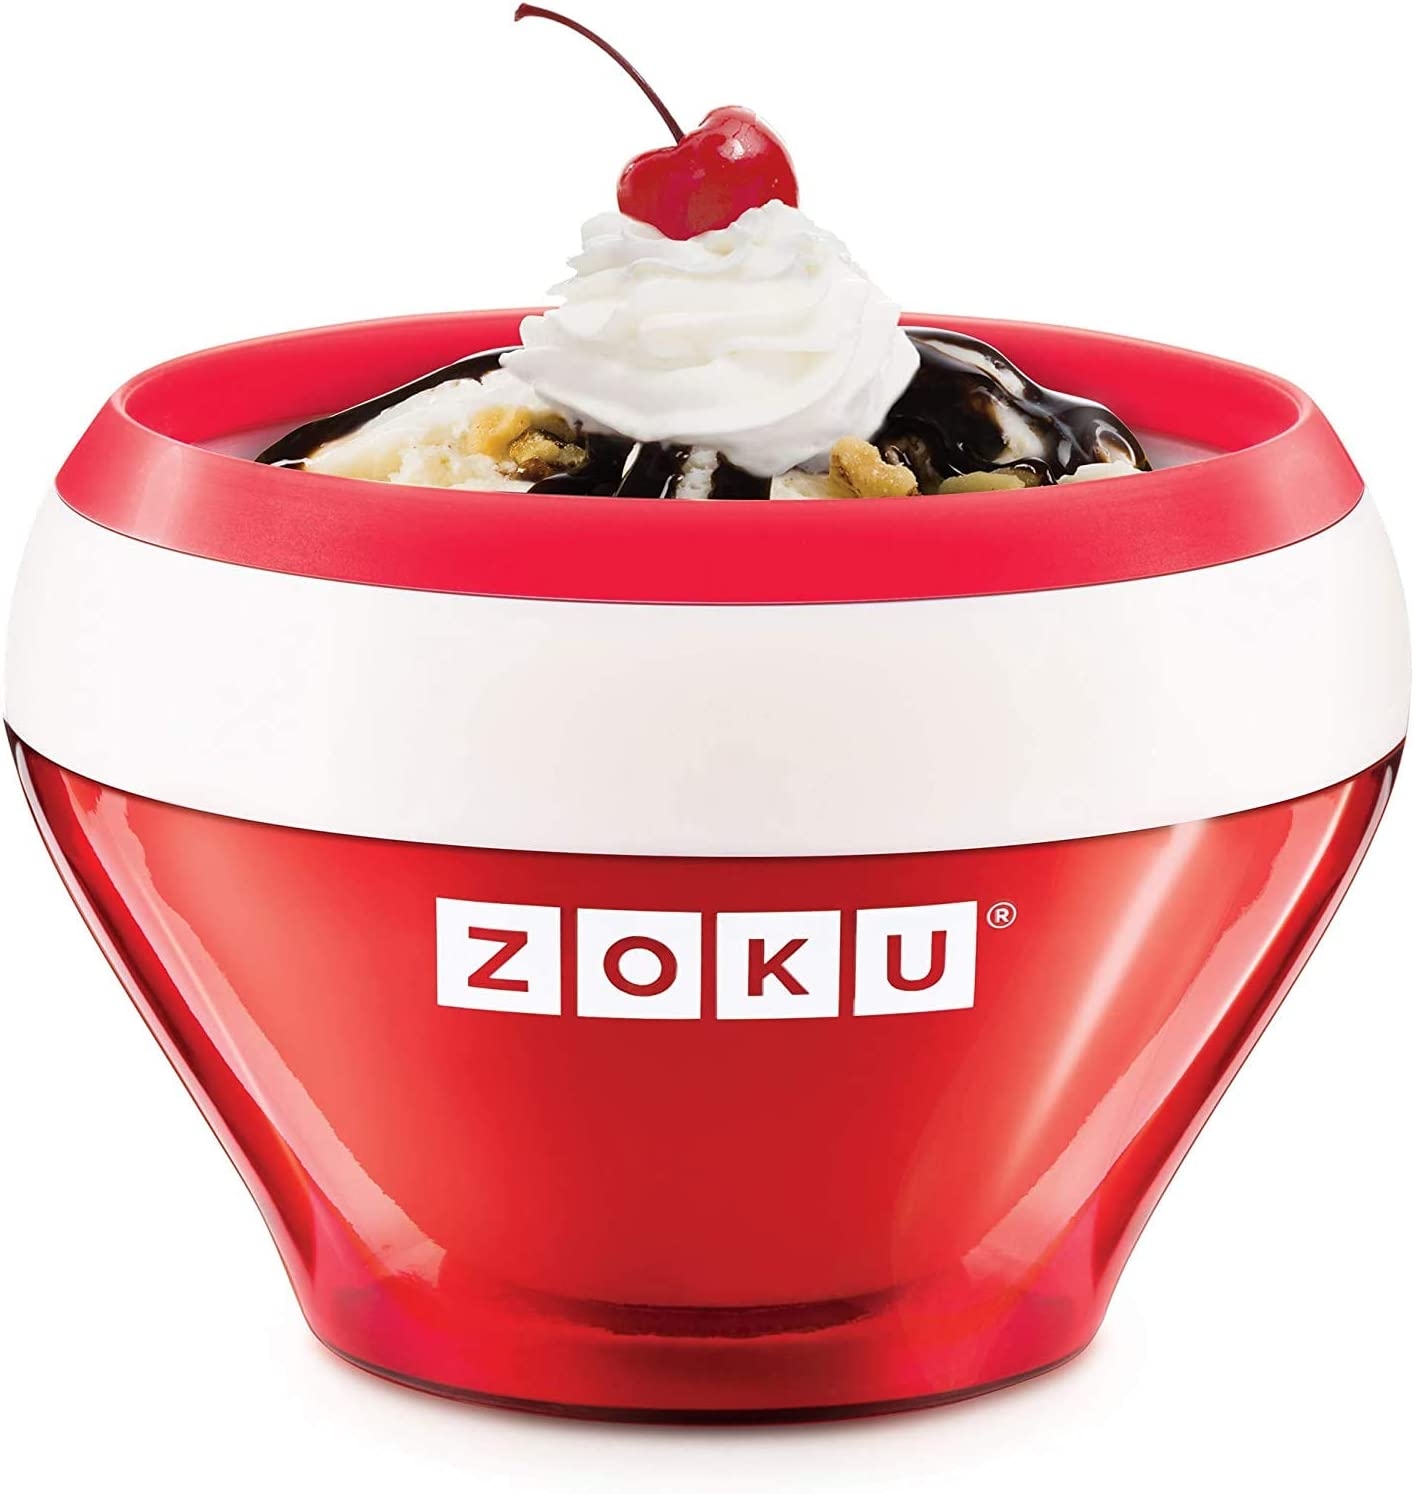 ZOKU Ice Cream Maker, Compact Make and Serve Bowl with Stainless Steel Freezer Core Creates Soft Serve, Frozen Yogurt, Ice Cream